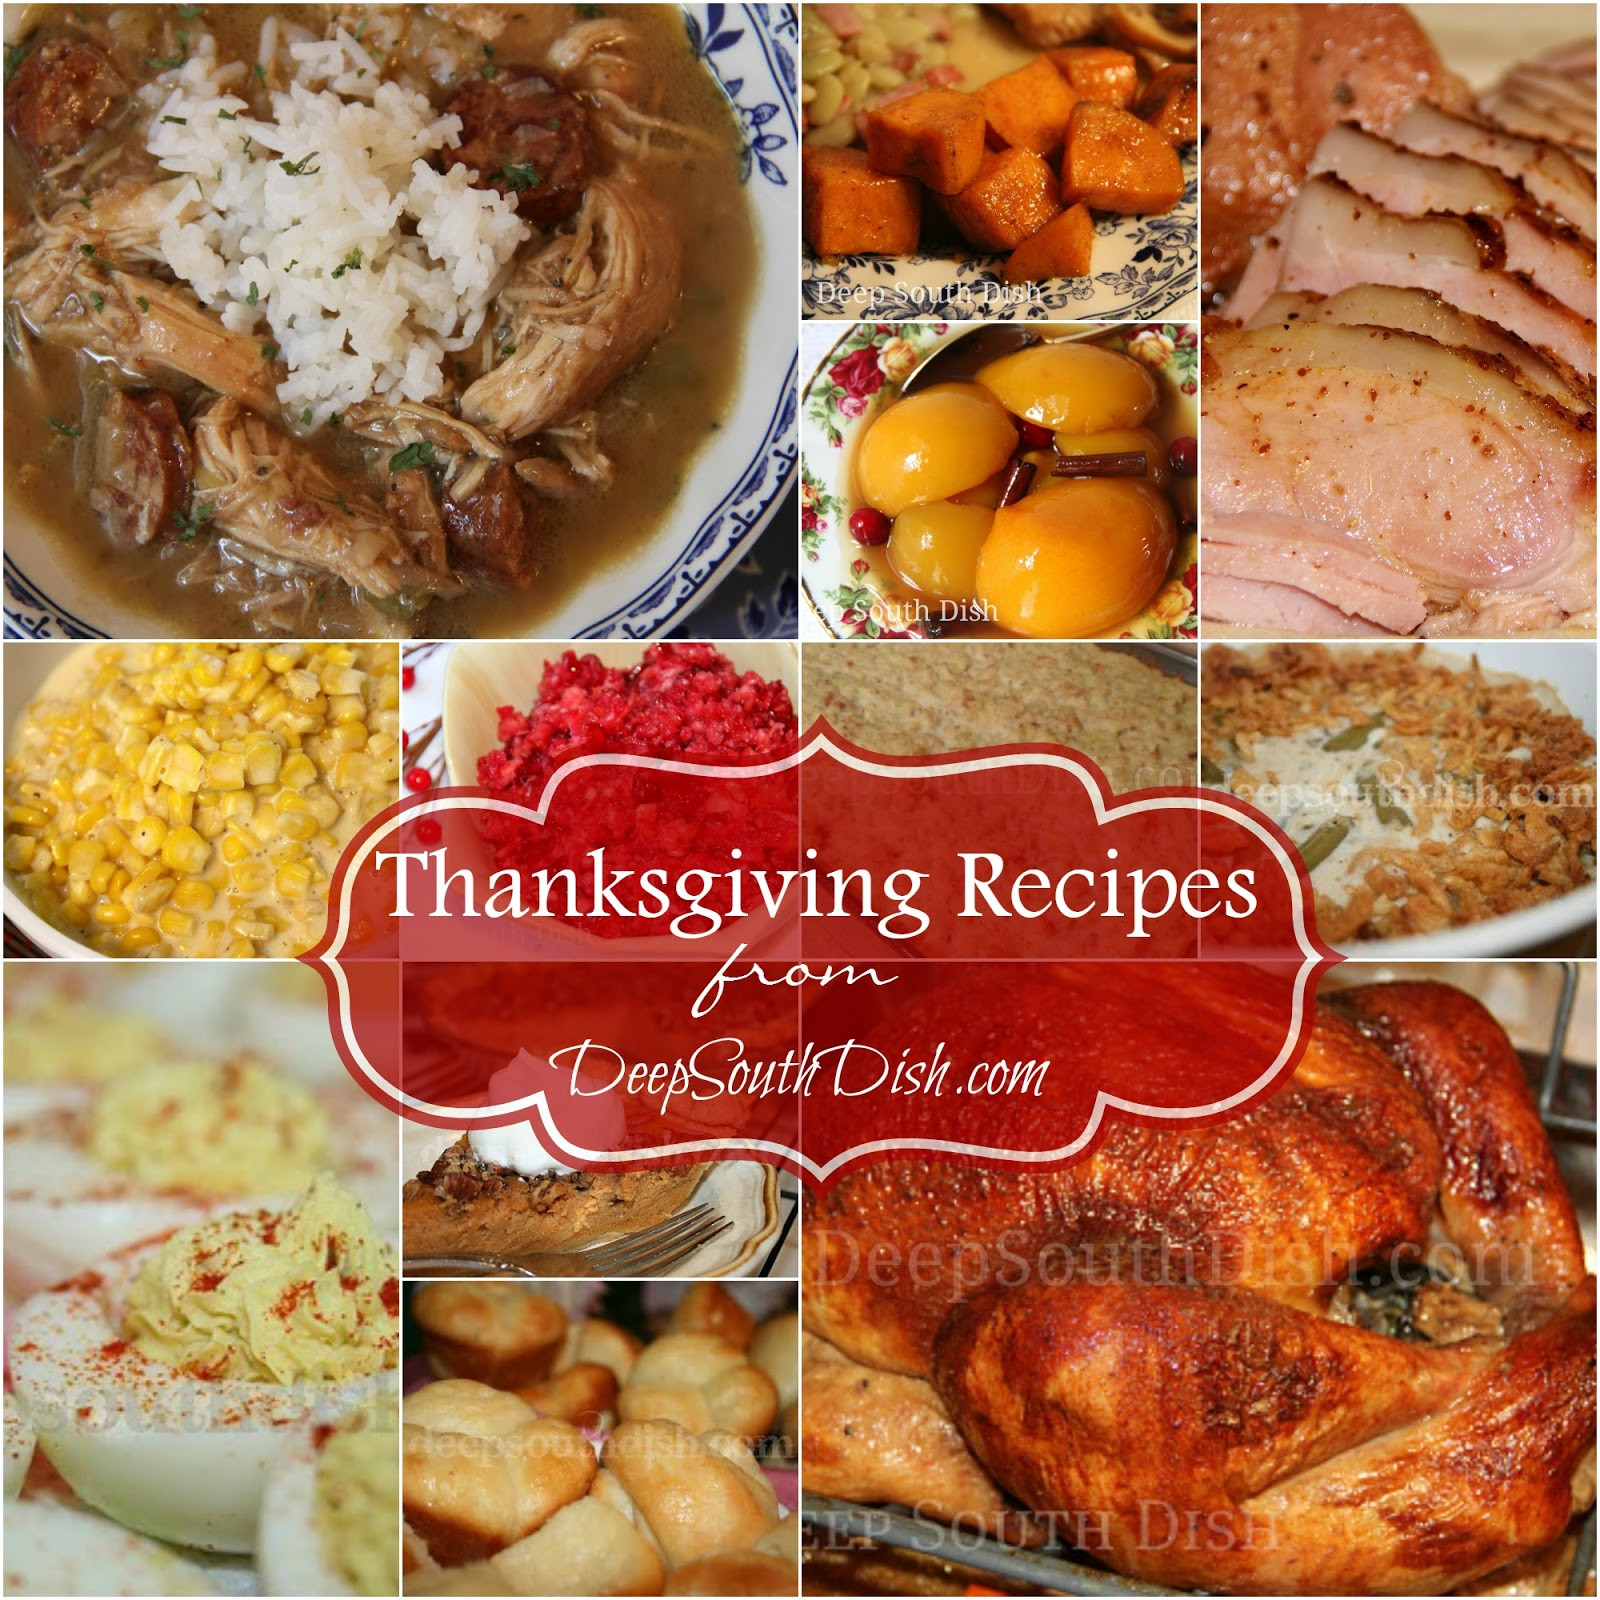 Soul Food Christmas Dinner Menu
 Deep South Dish Deep South Southern Thanksgiving Recipes